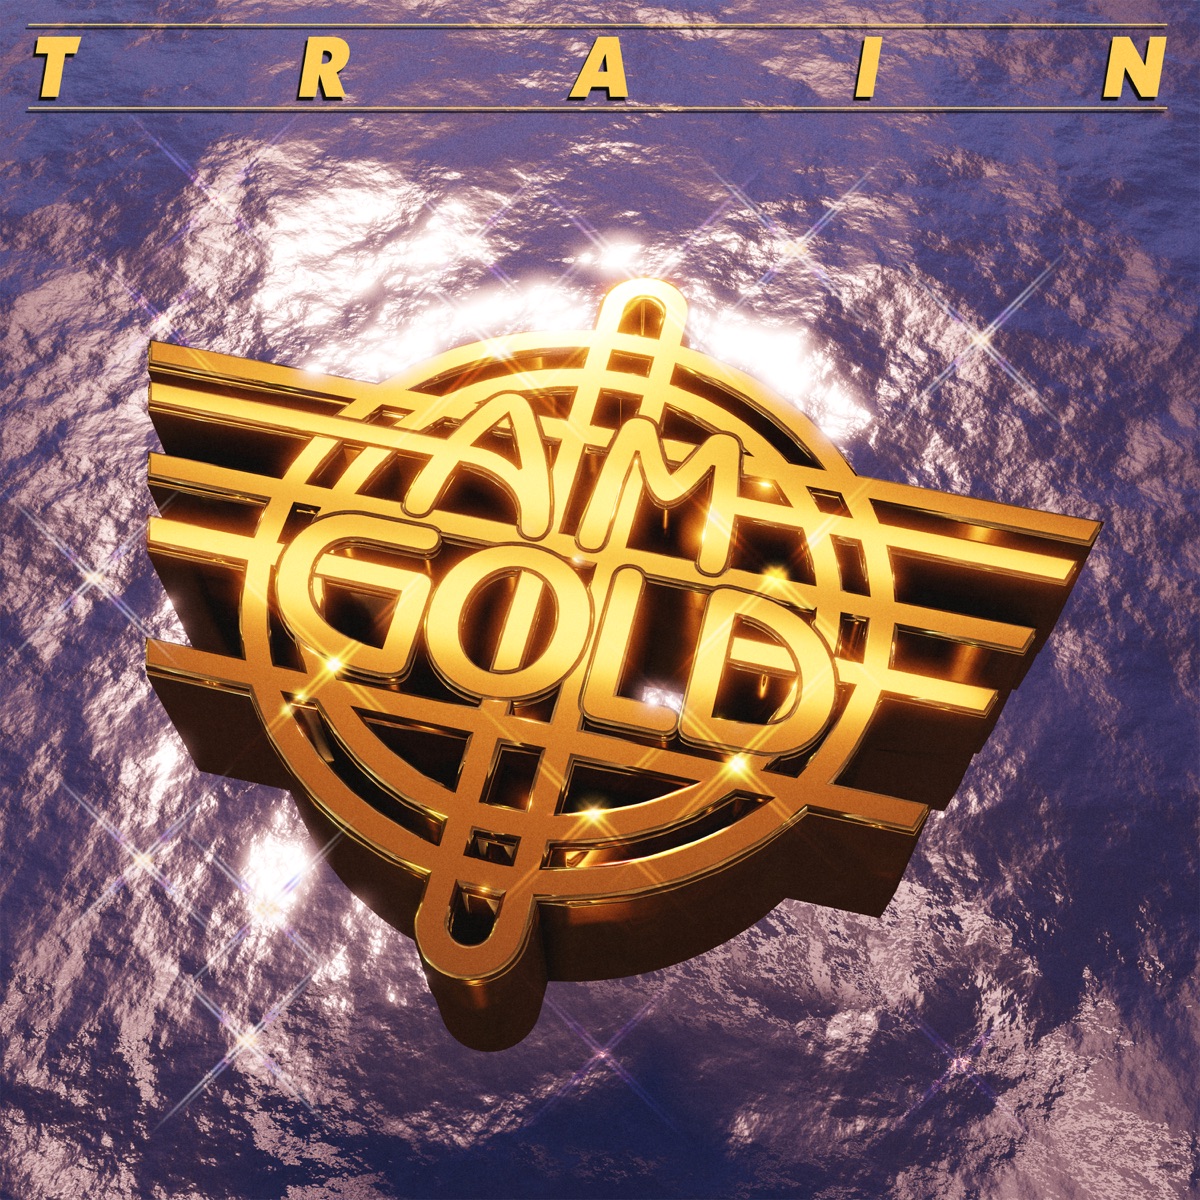 Greatest Hits - Album by Train - Apple Music